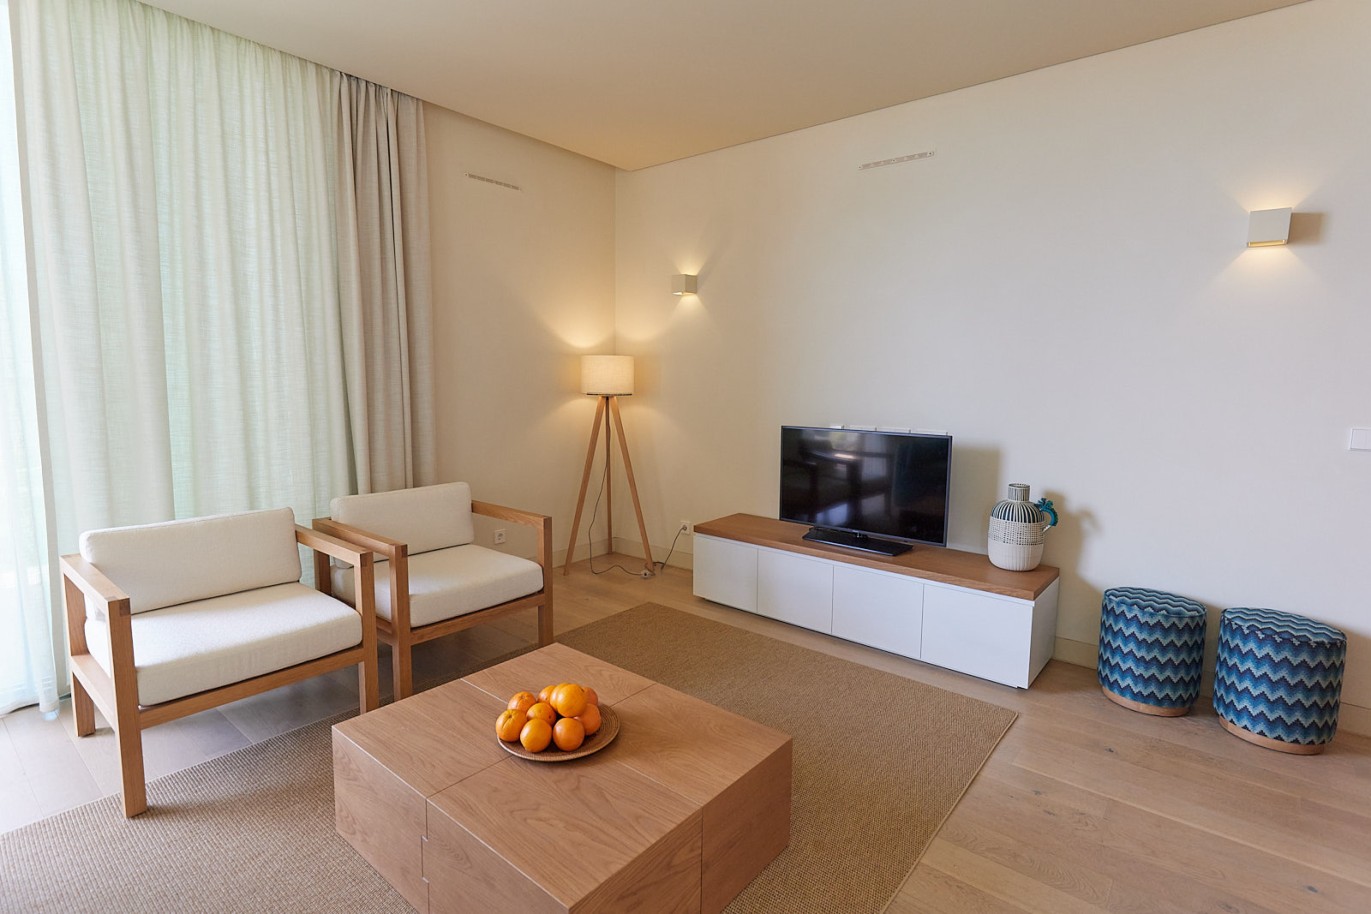 2 bedroom apartment in resort, for sale in Porches, Algarve_229156